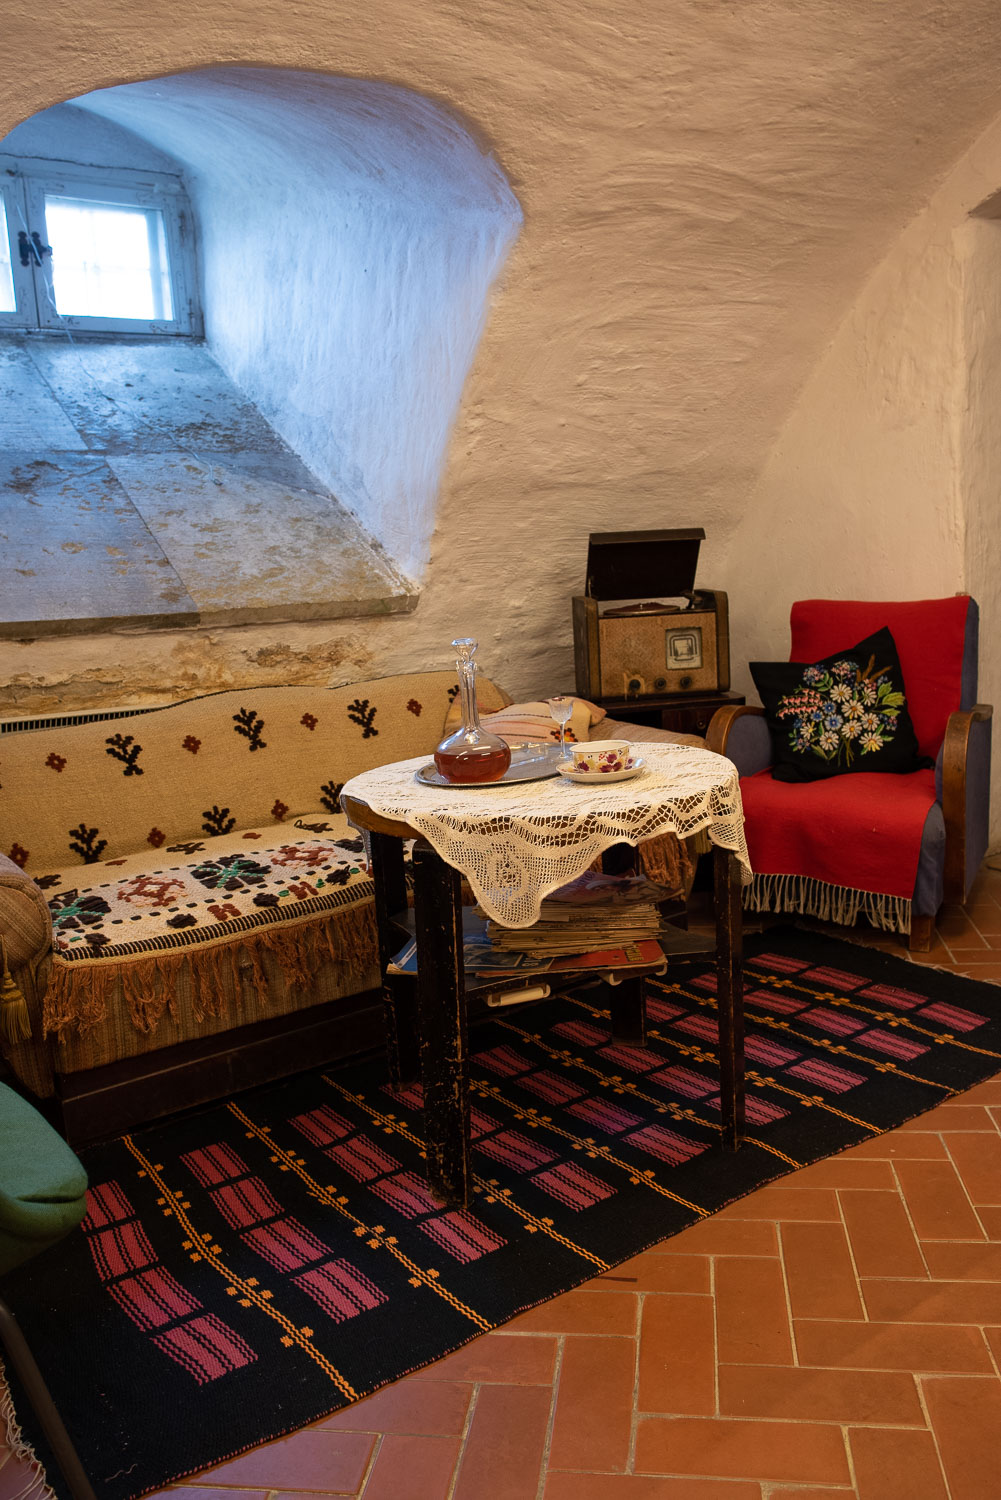 Grandmother's room from the 40s in Kolga Museum